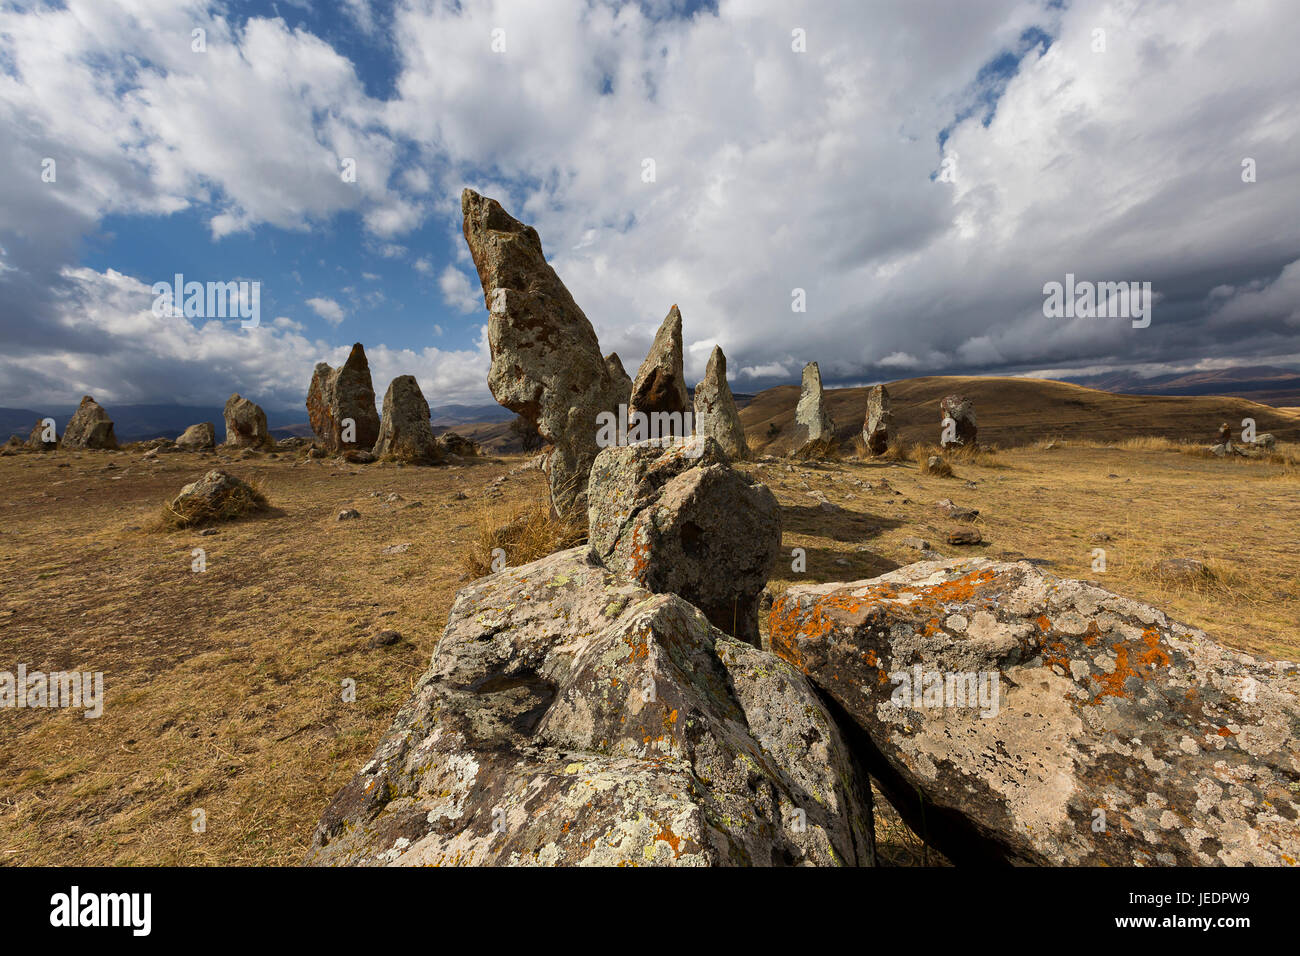 Osservatorio antico chiamato Zorats Karer o Karahunj, noto come stonehenge armena. Foto Stock